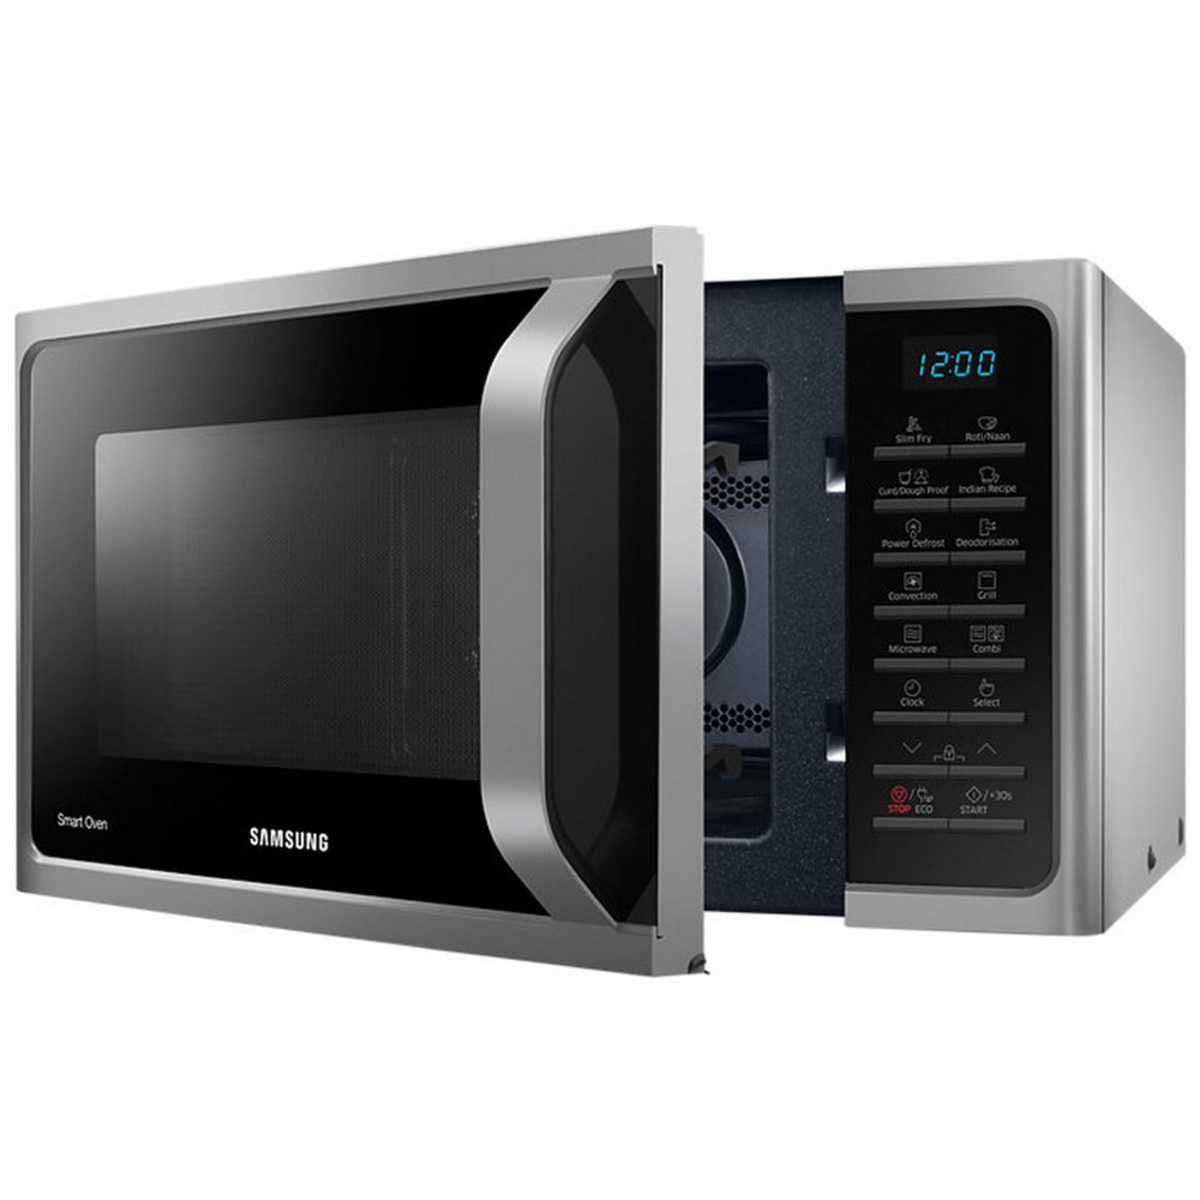 Samsung Microwave Oven MC28H5025VS 28 Ltr